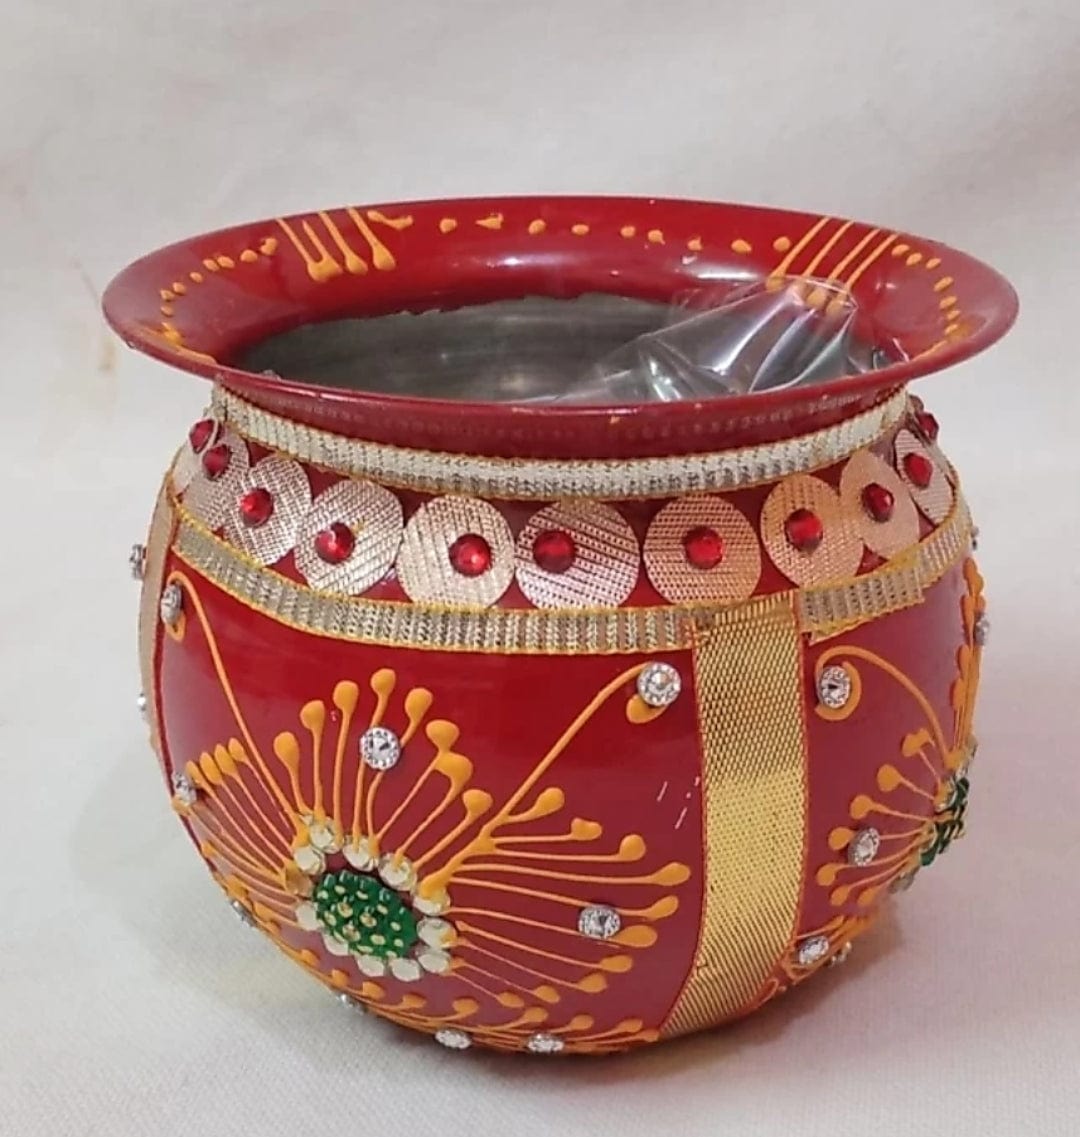 Lamansh pooja kalash LAMANSH Decorative Metal Handmade lota for Pooja | Handicraft Home Decor Designer Red lota - Pooja, Festival, Diwali, Home Decoration | Karwa Chauth & Janmaashtami Pooja Lota Kalash